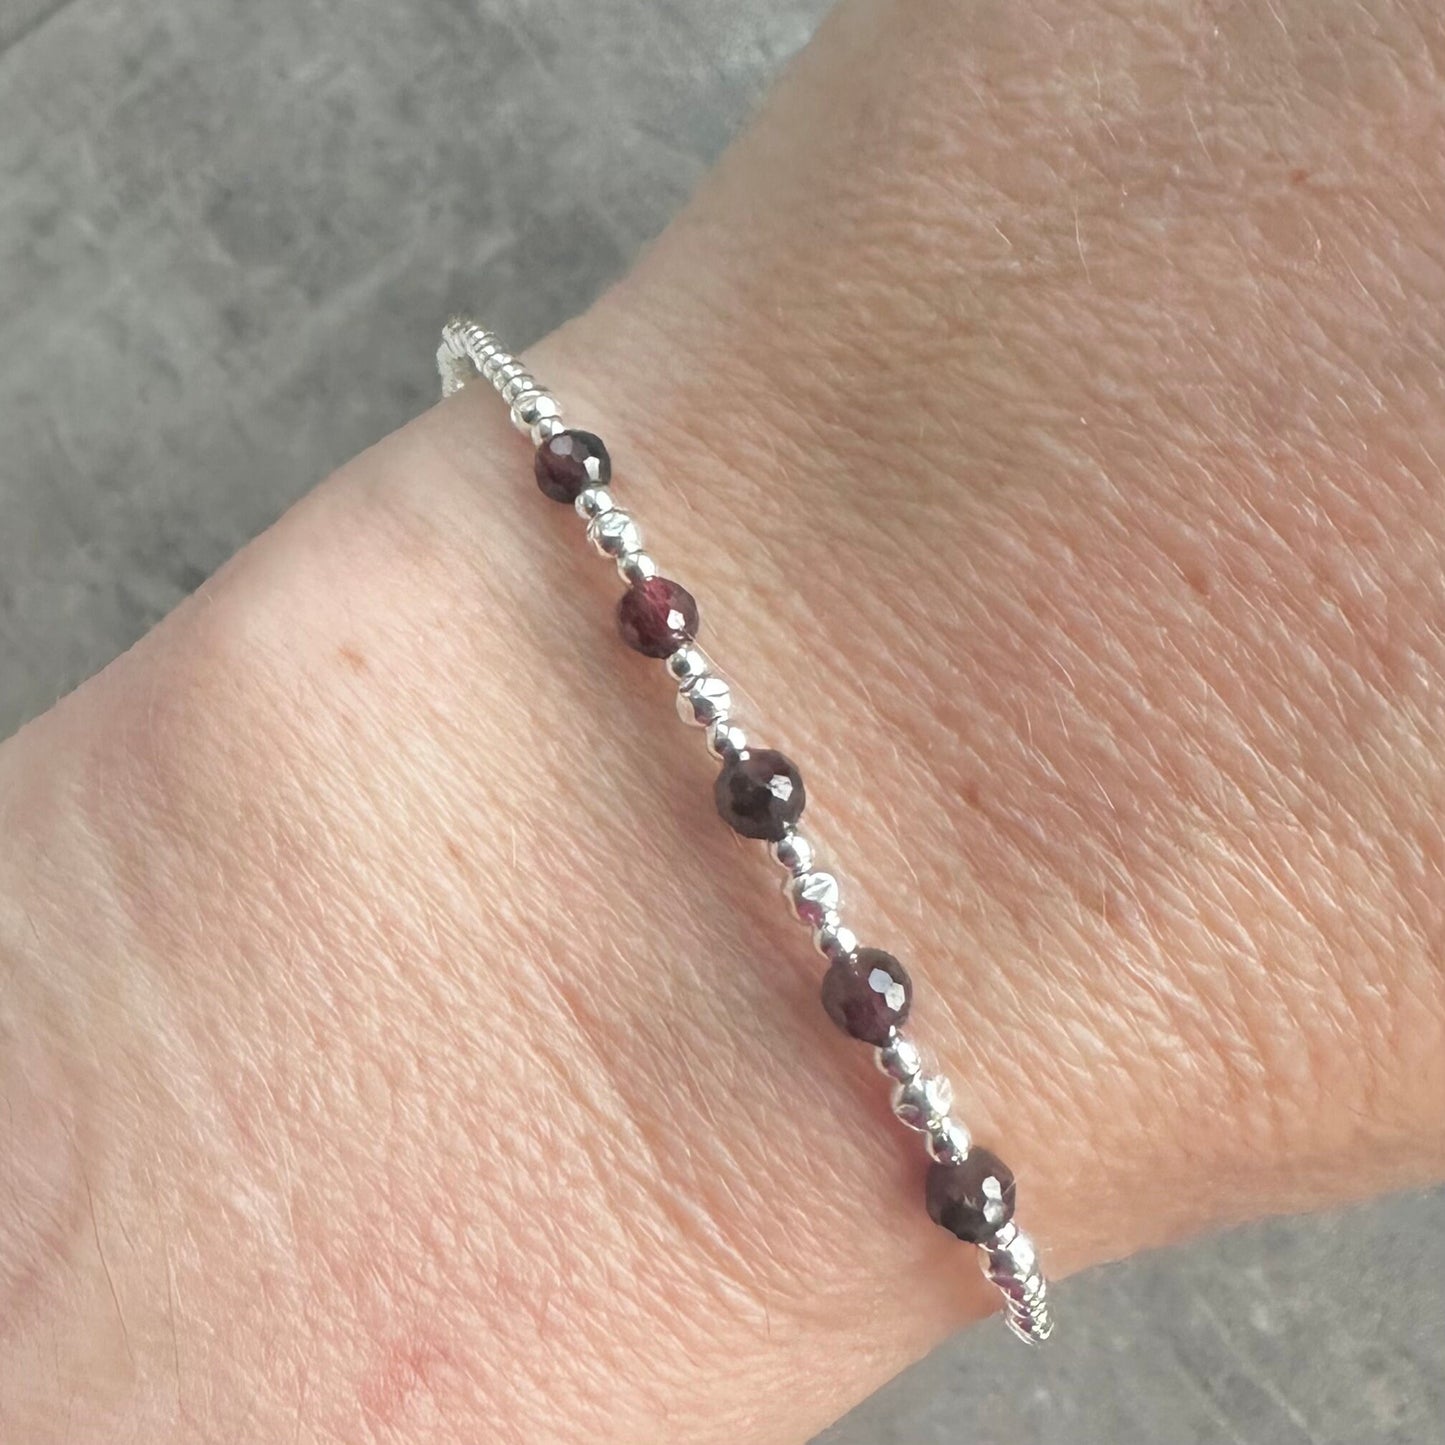 January Birthstone Garnet Slider Bracelet, sterling silver adjustable bracelet with birthstone birthday gift for women 3mm